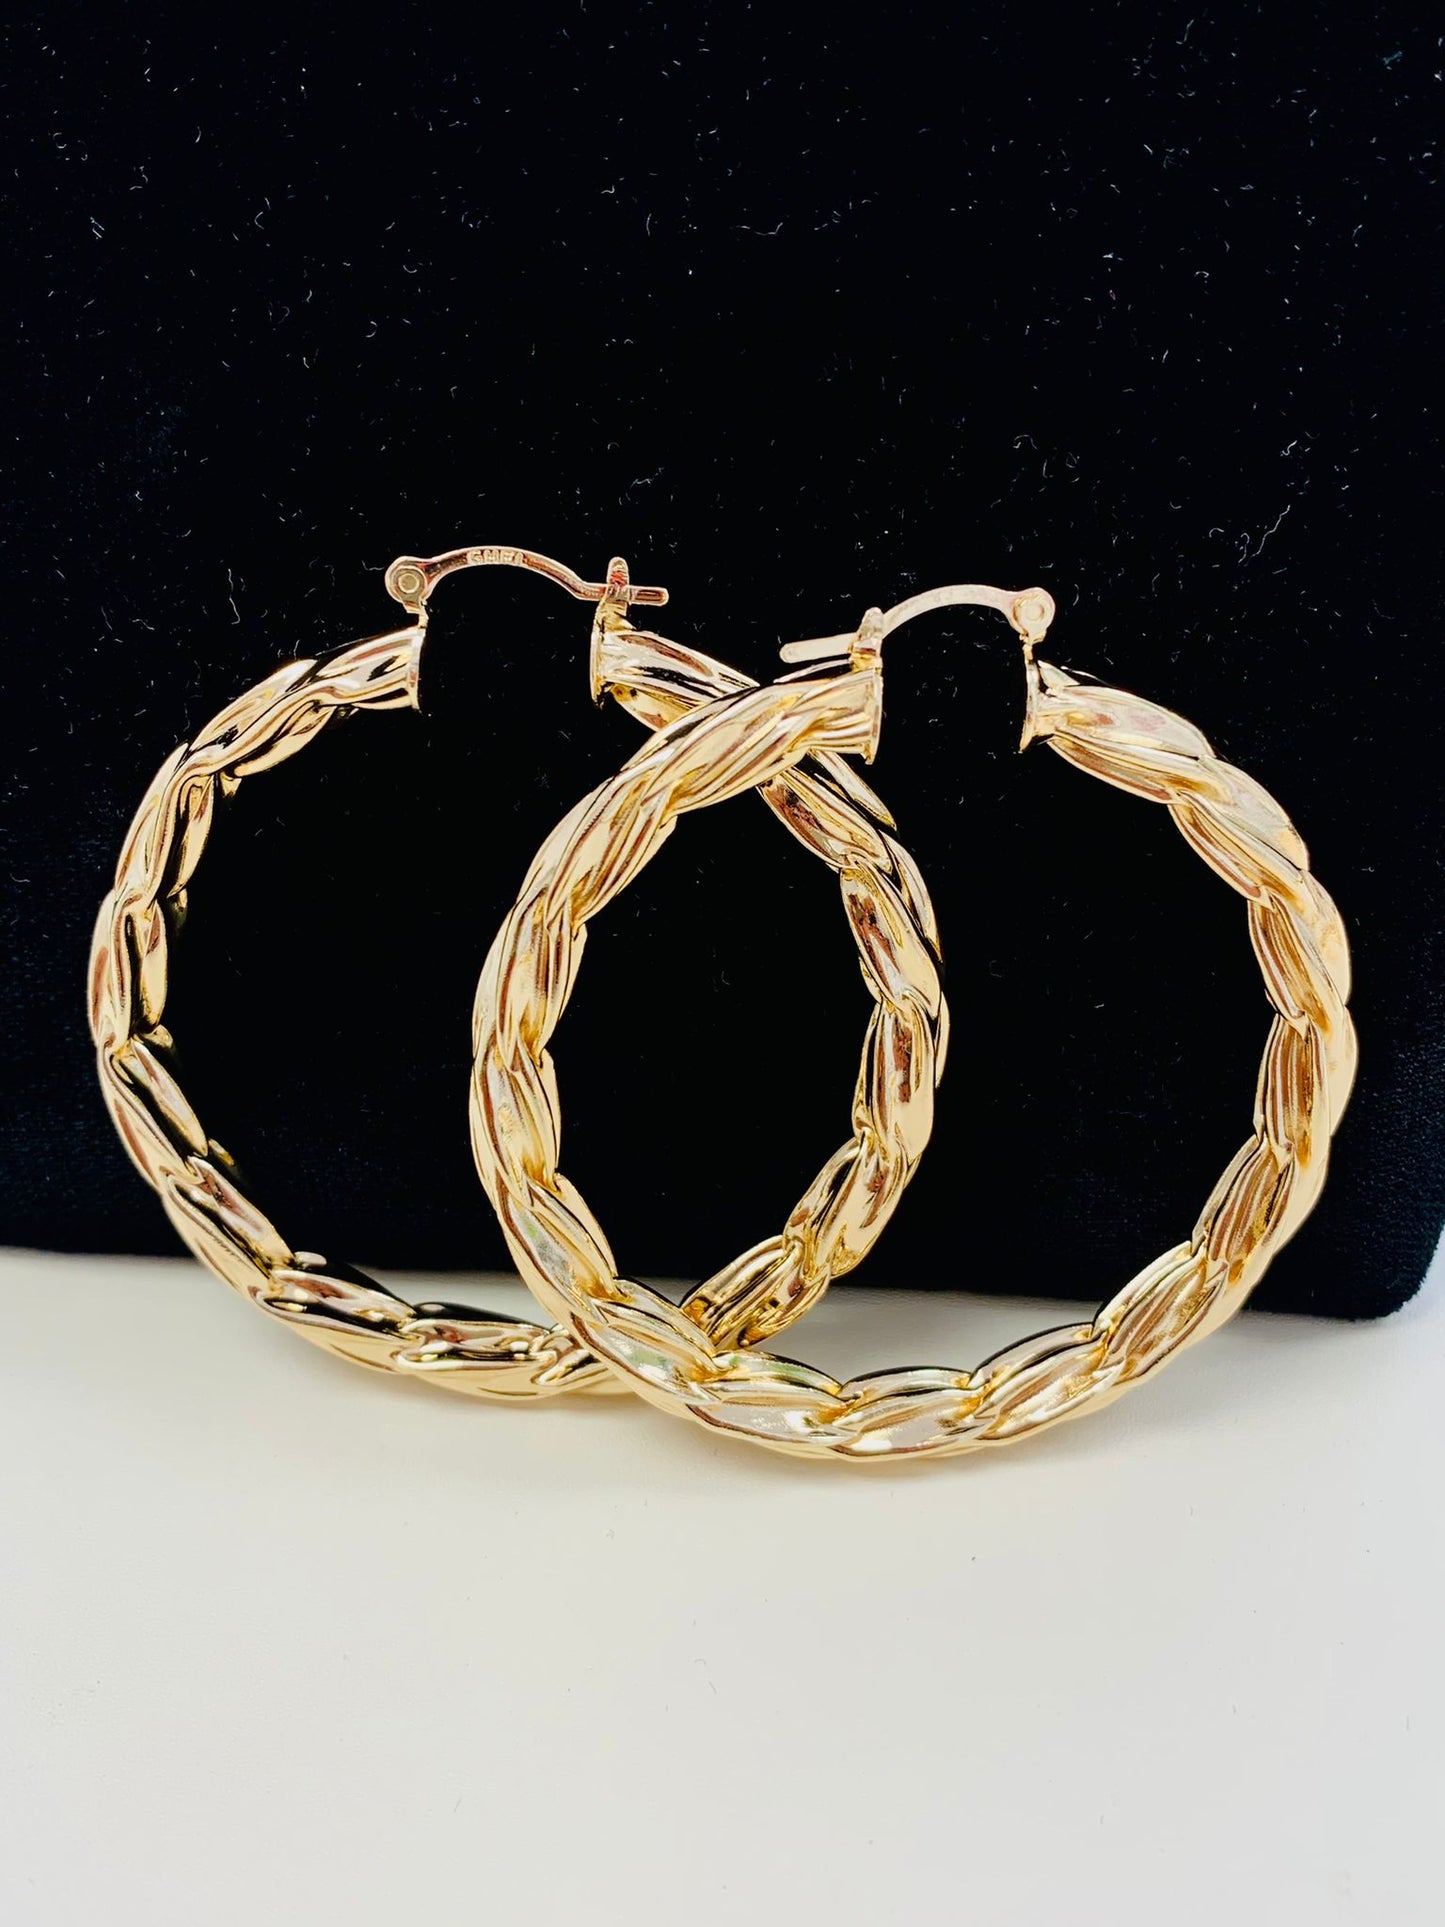 Real 14K Gold Filled Hoop Earrings, Arracadas Aretes de Oro